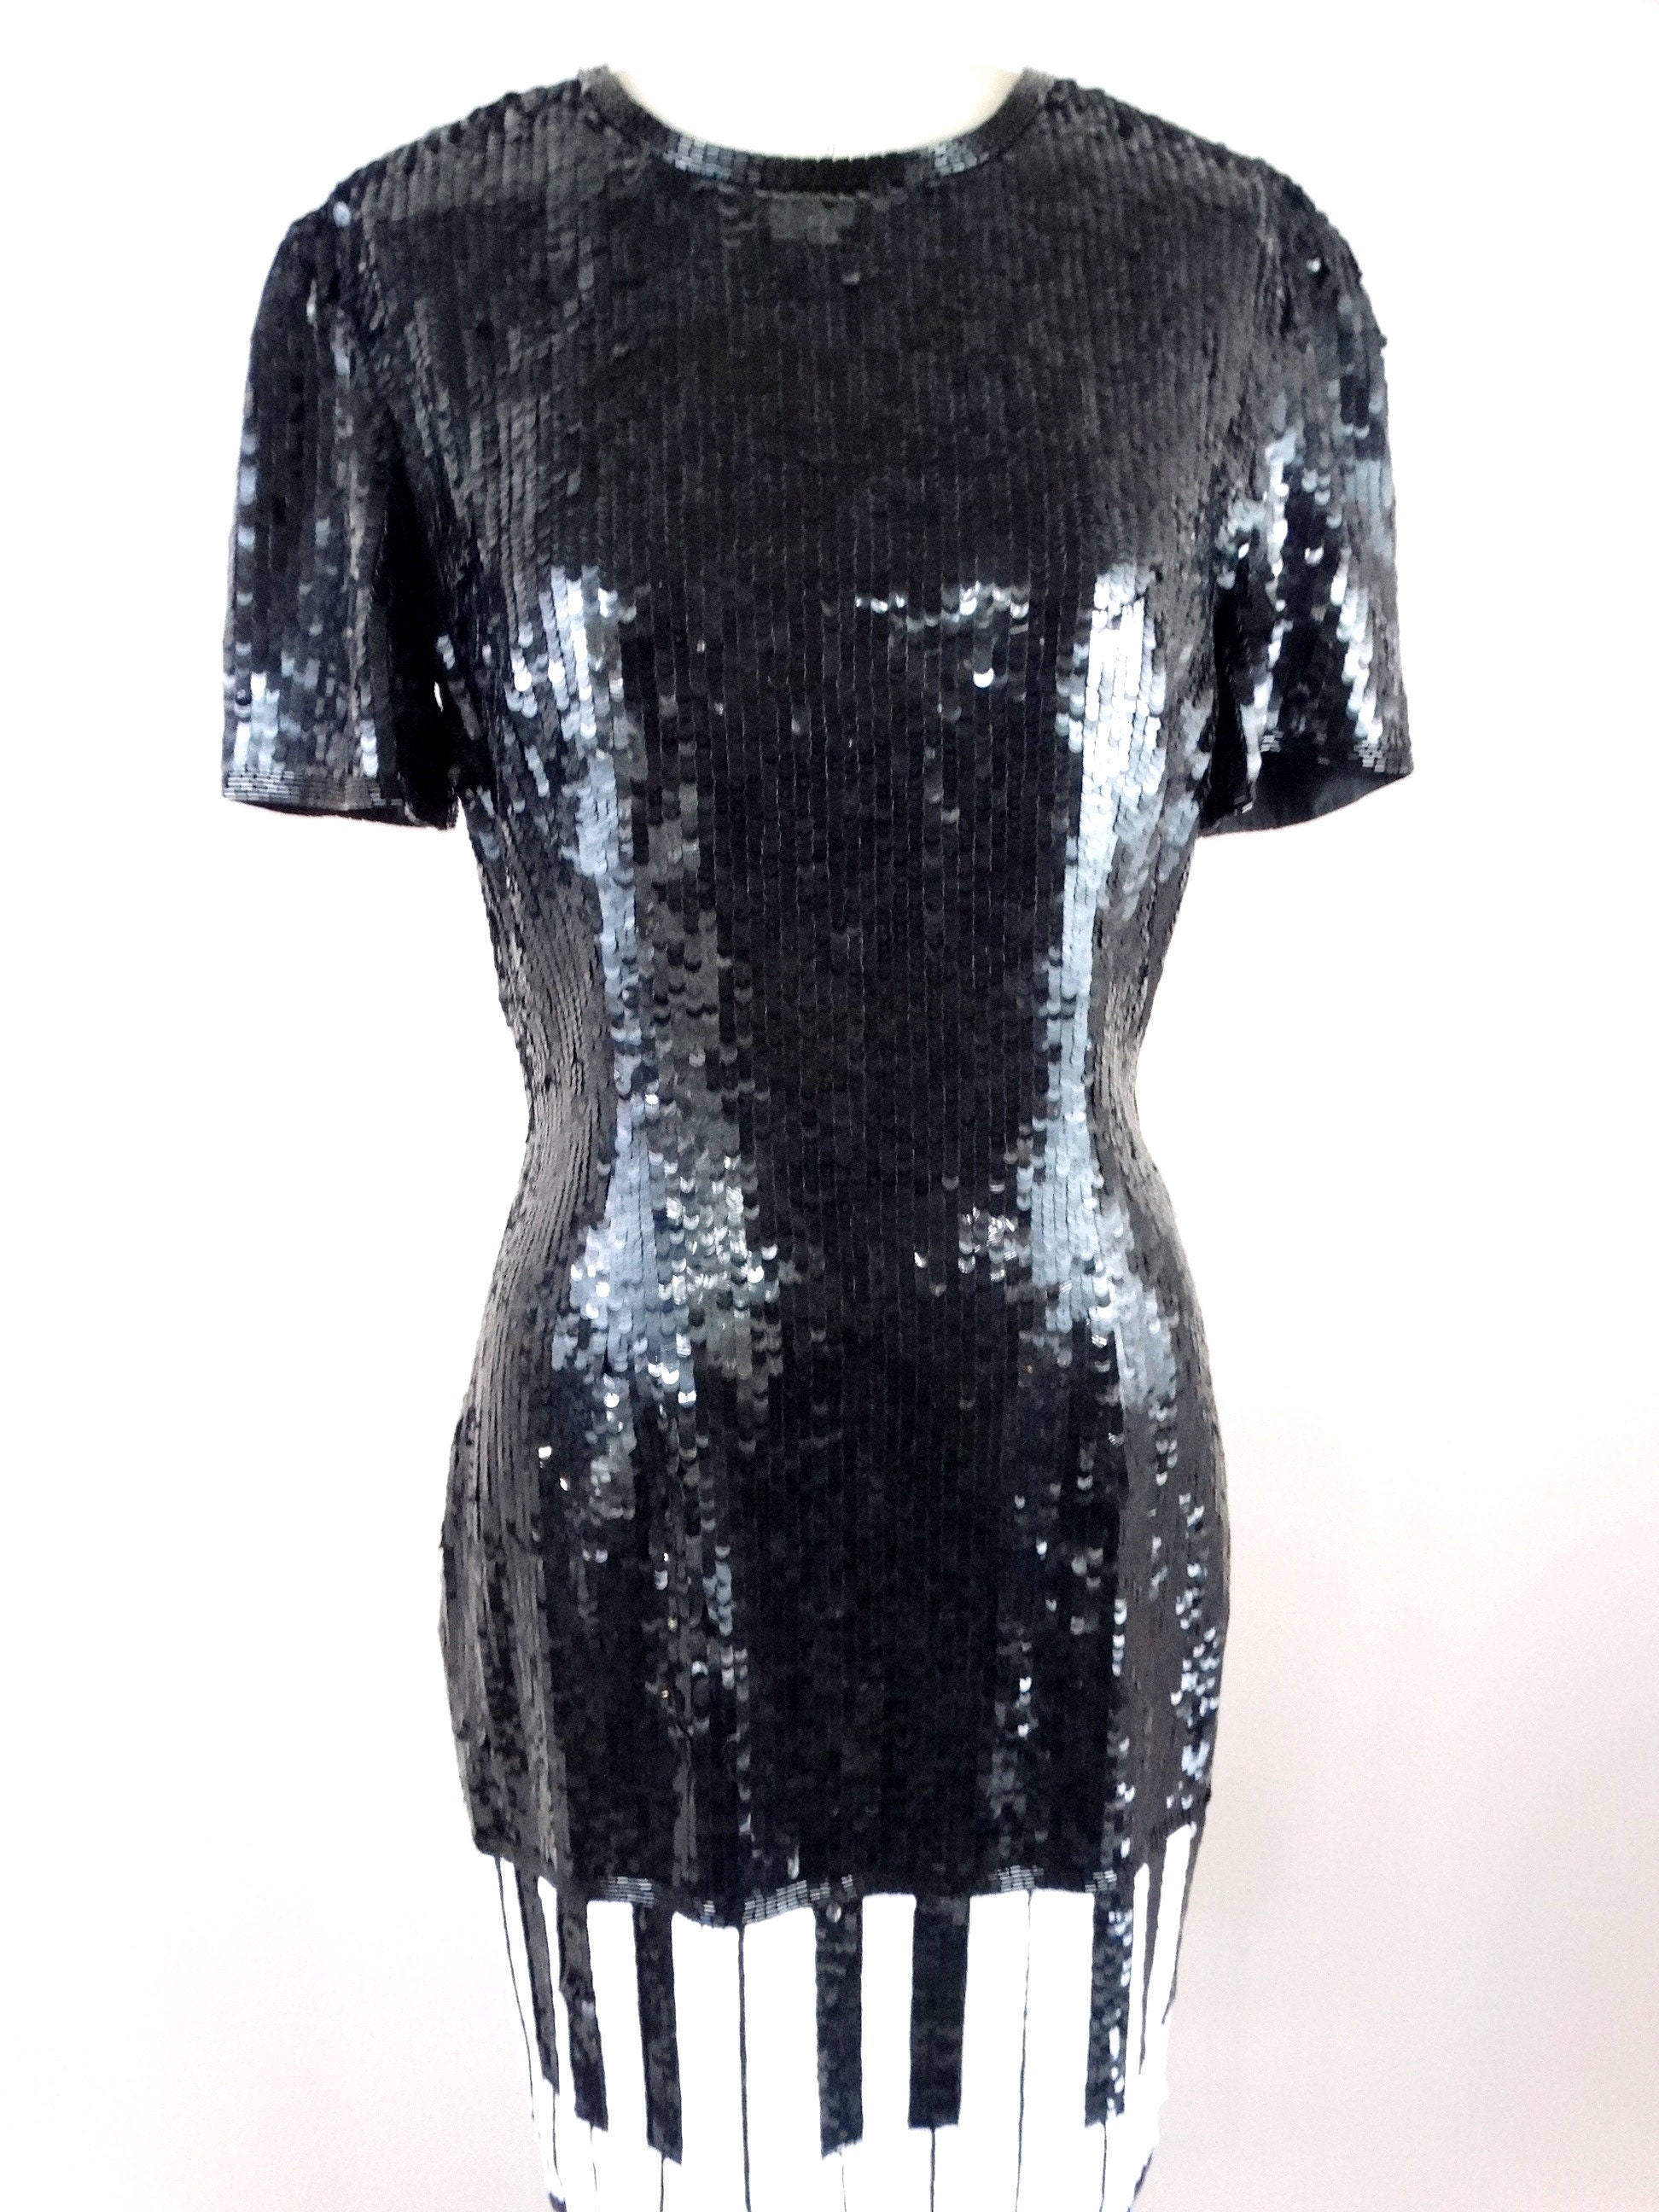 Rockstar Sequined Dress // Music Pop Art Glam Sequined Dress | Etsy